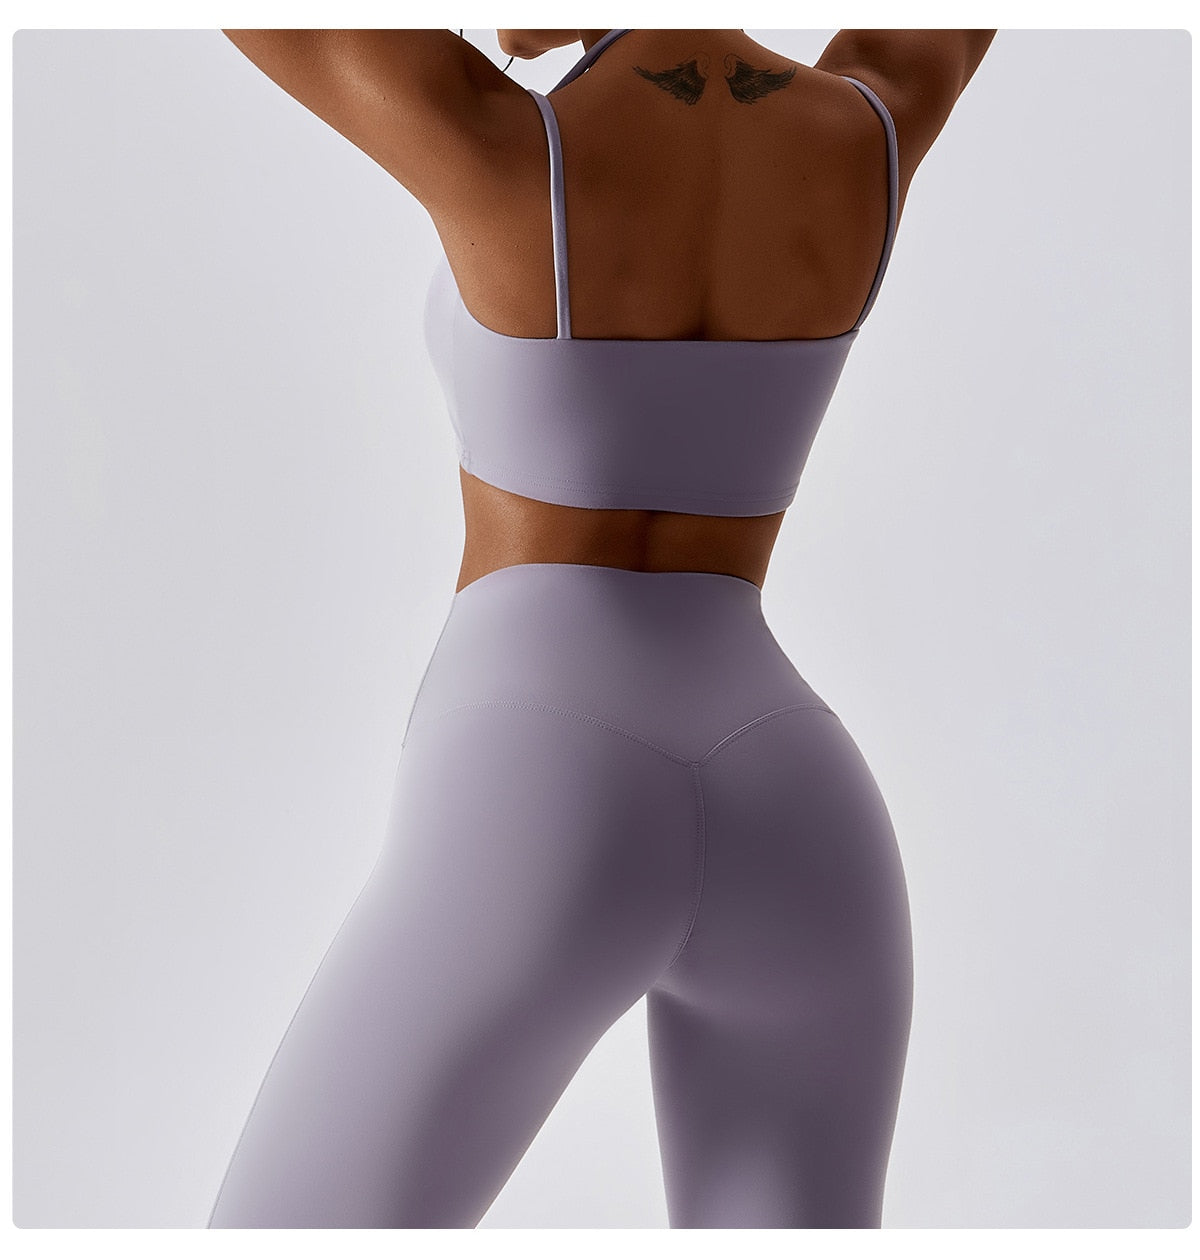 Women's Sports Underwear Gym High Strength Fitness Vest Shockproof Tight Quick-Drying Yoga Bra Outdoor Running Back Yoga Top   59.99 EZYSELLA SHOP